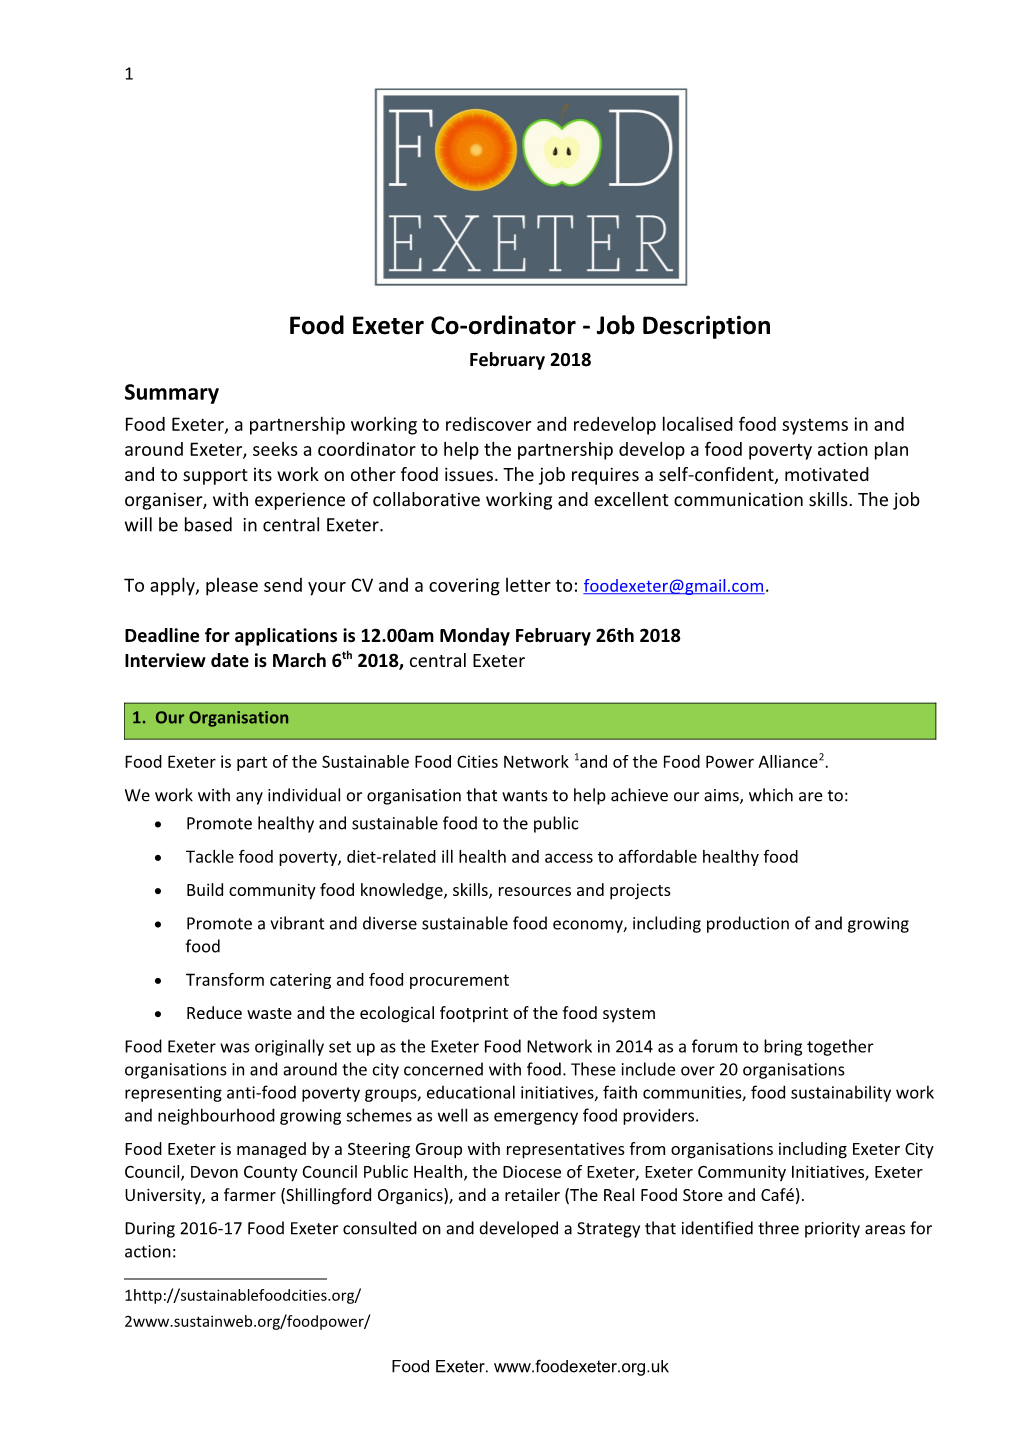 Food Exeter Co-Ordinator - Job Description